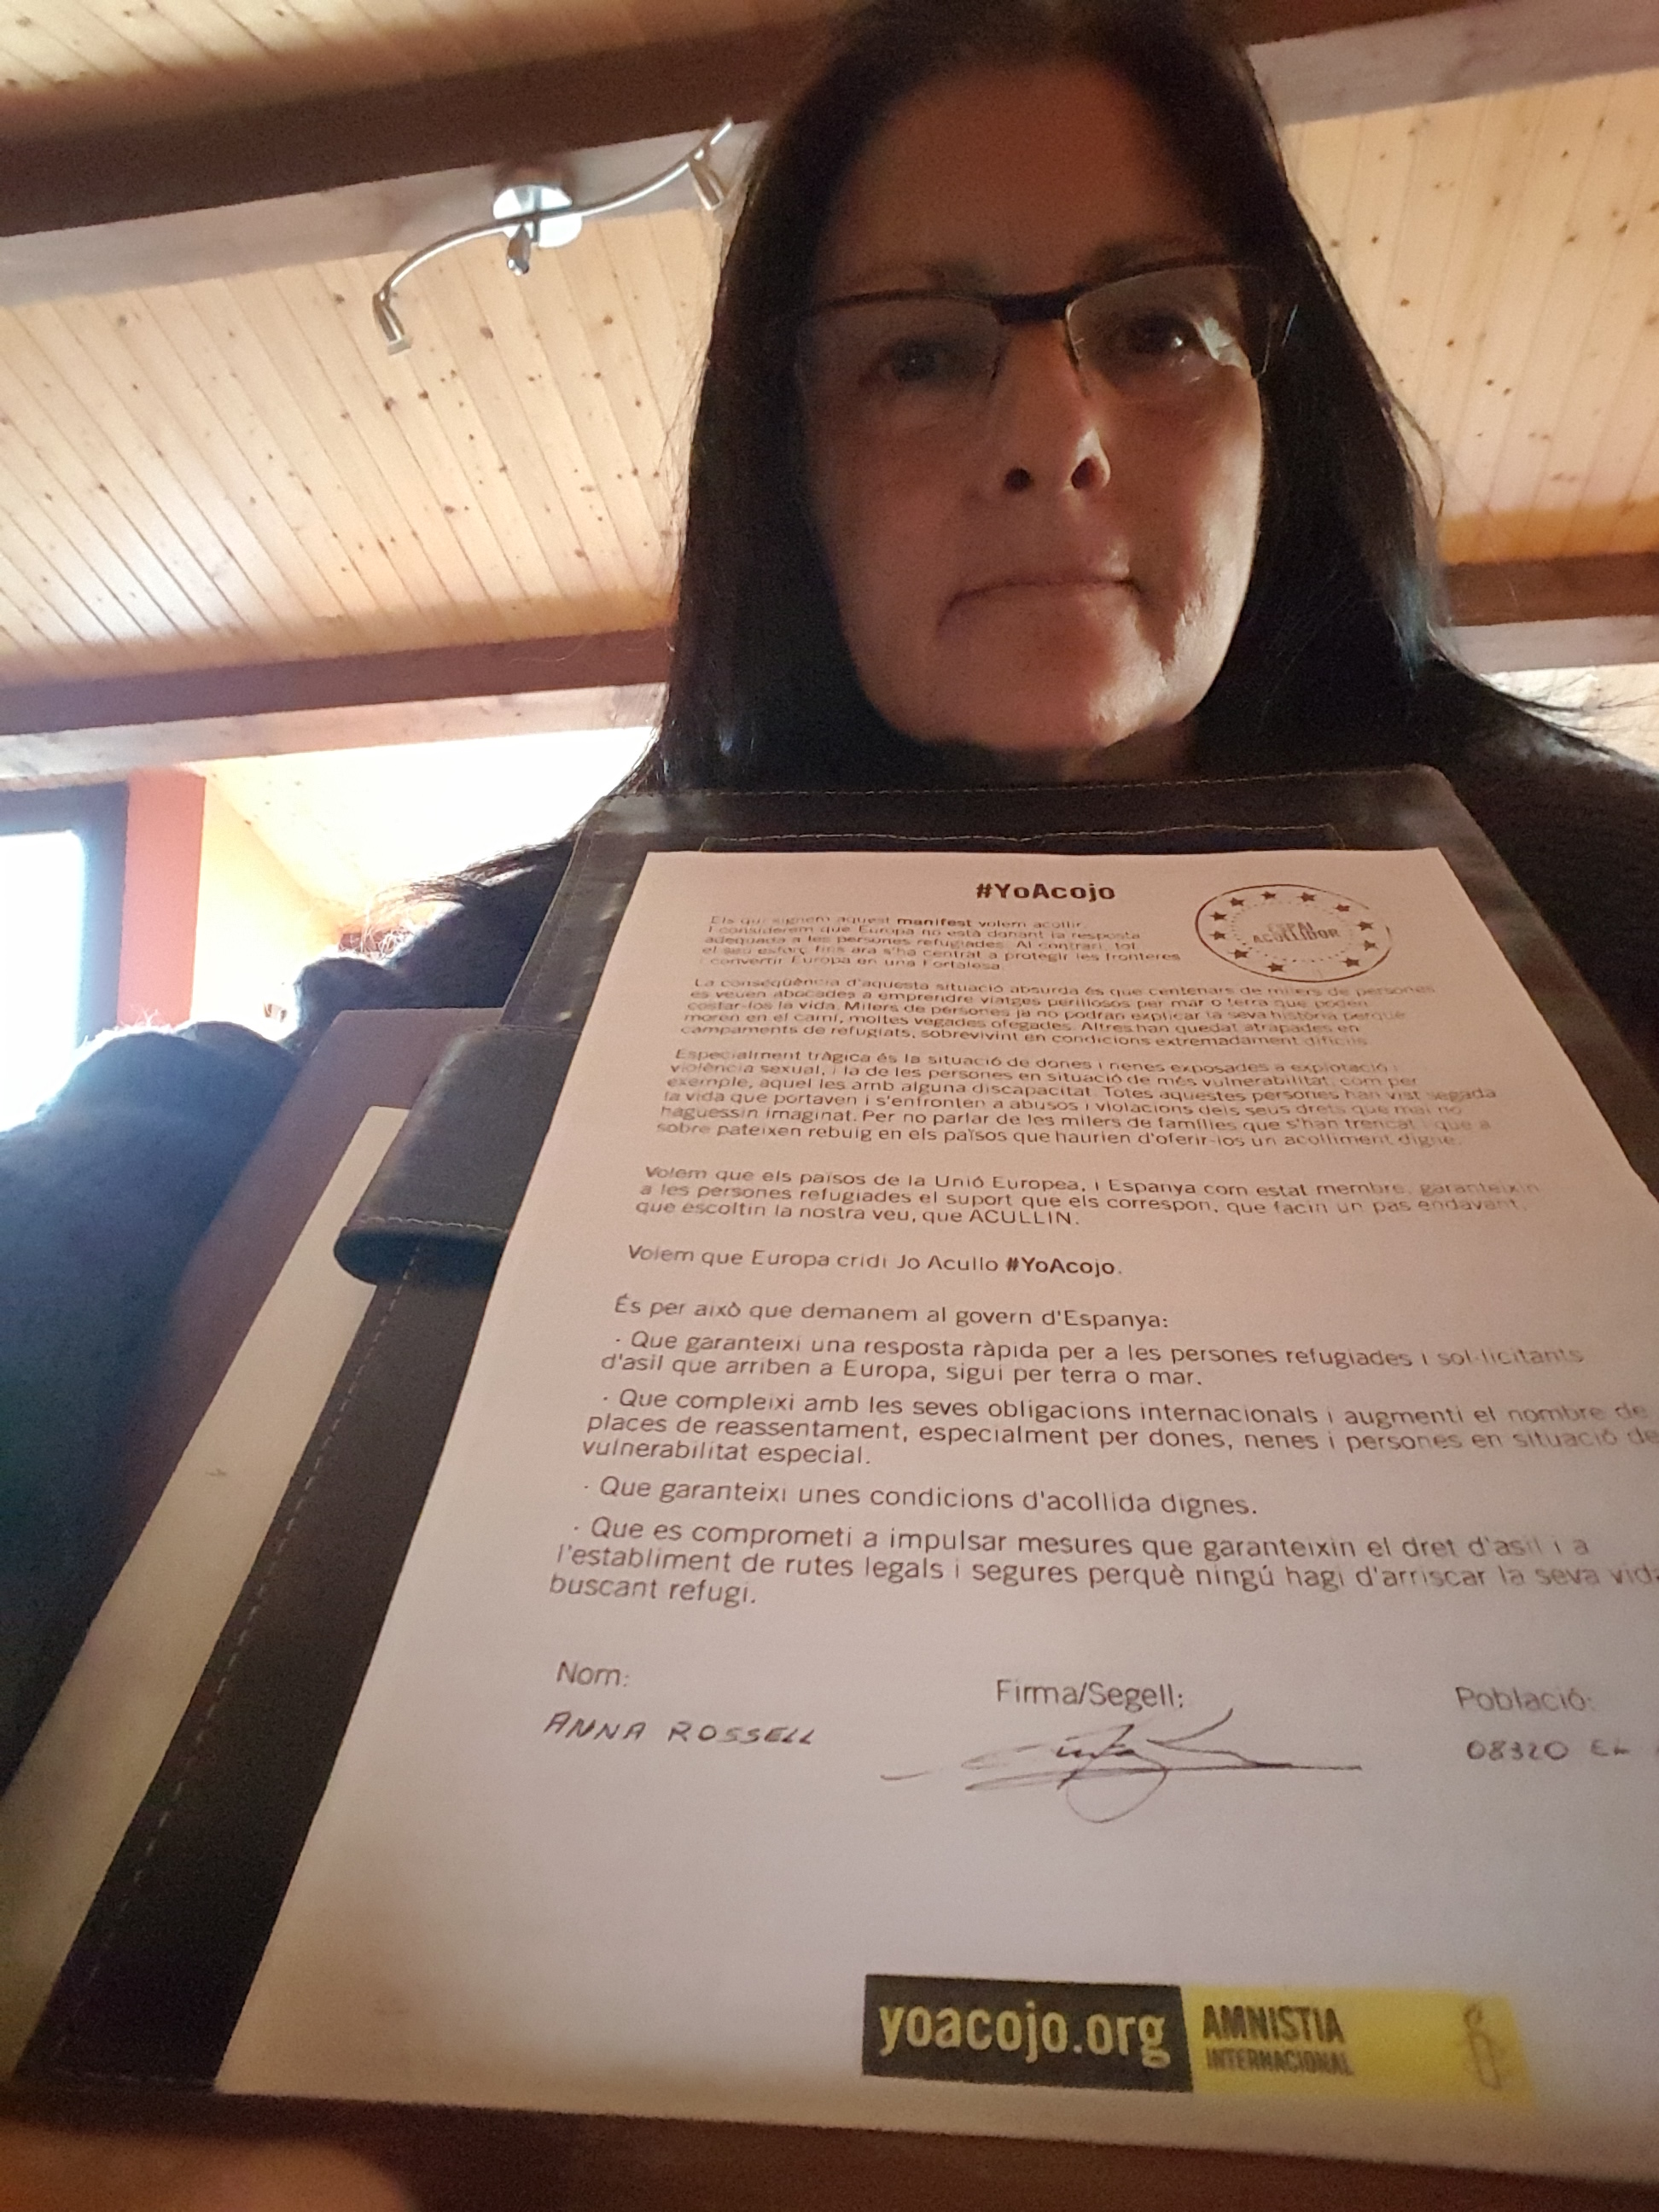 L'escriptora Anna Rossell signa el Manifest "Jo Acullo" / La escritora Anna Rossell firma el Manifiesto "Yo Acojo"